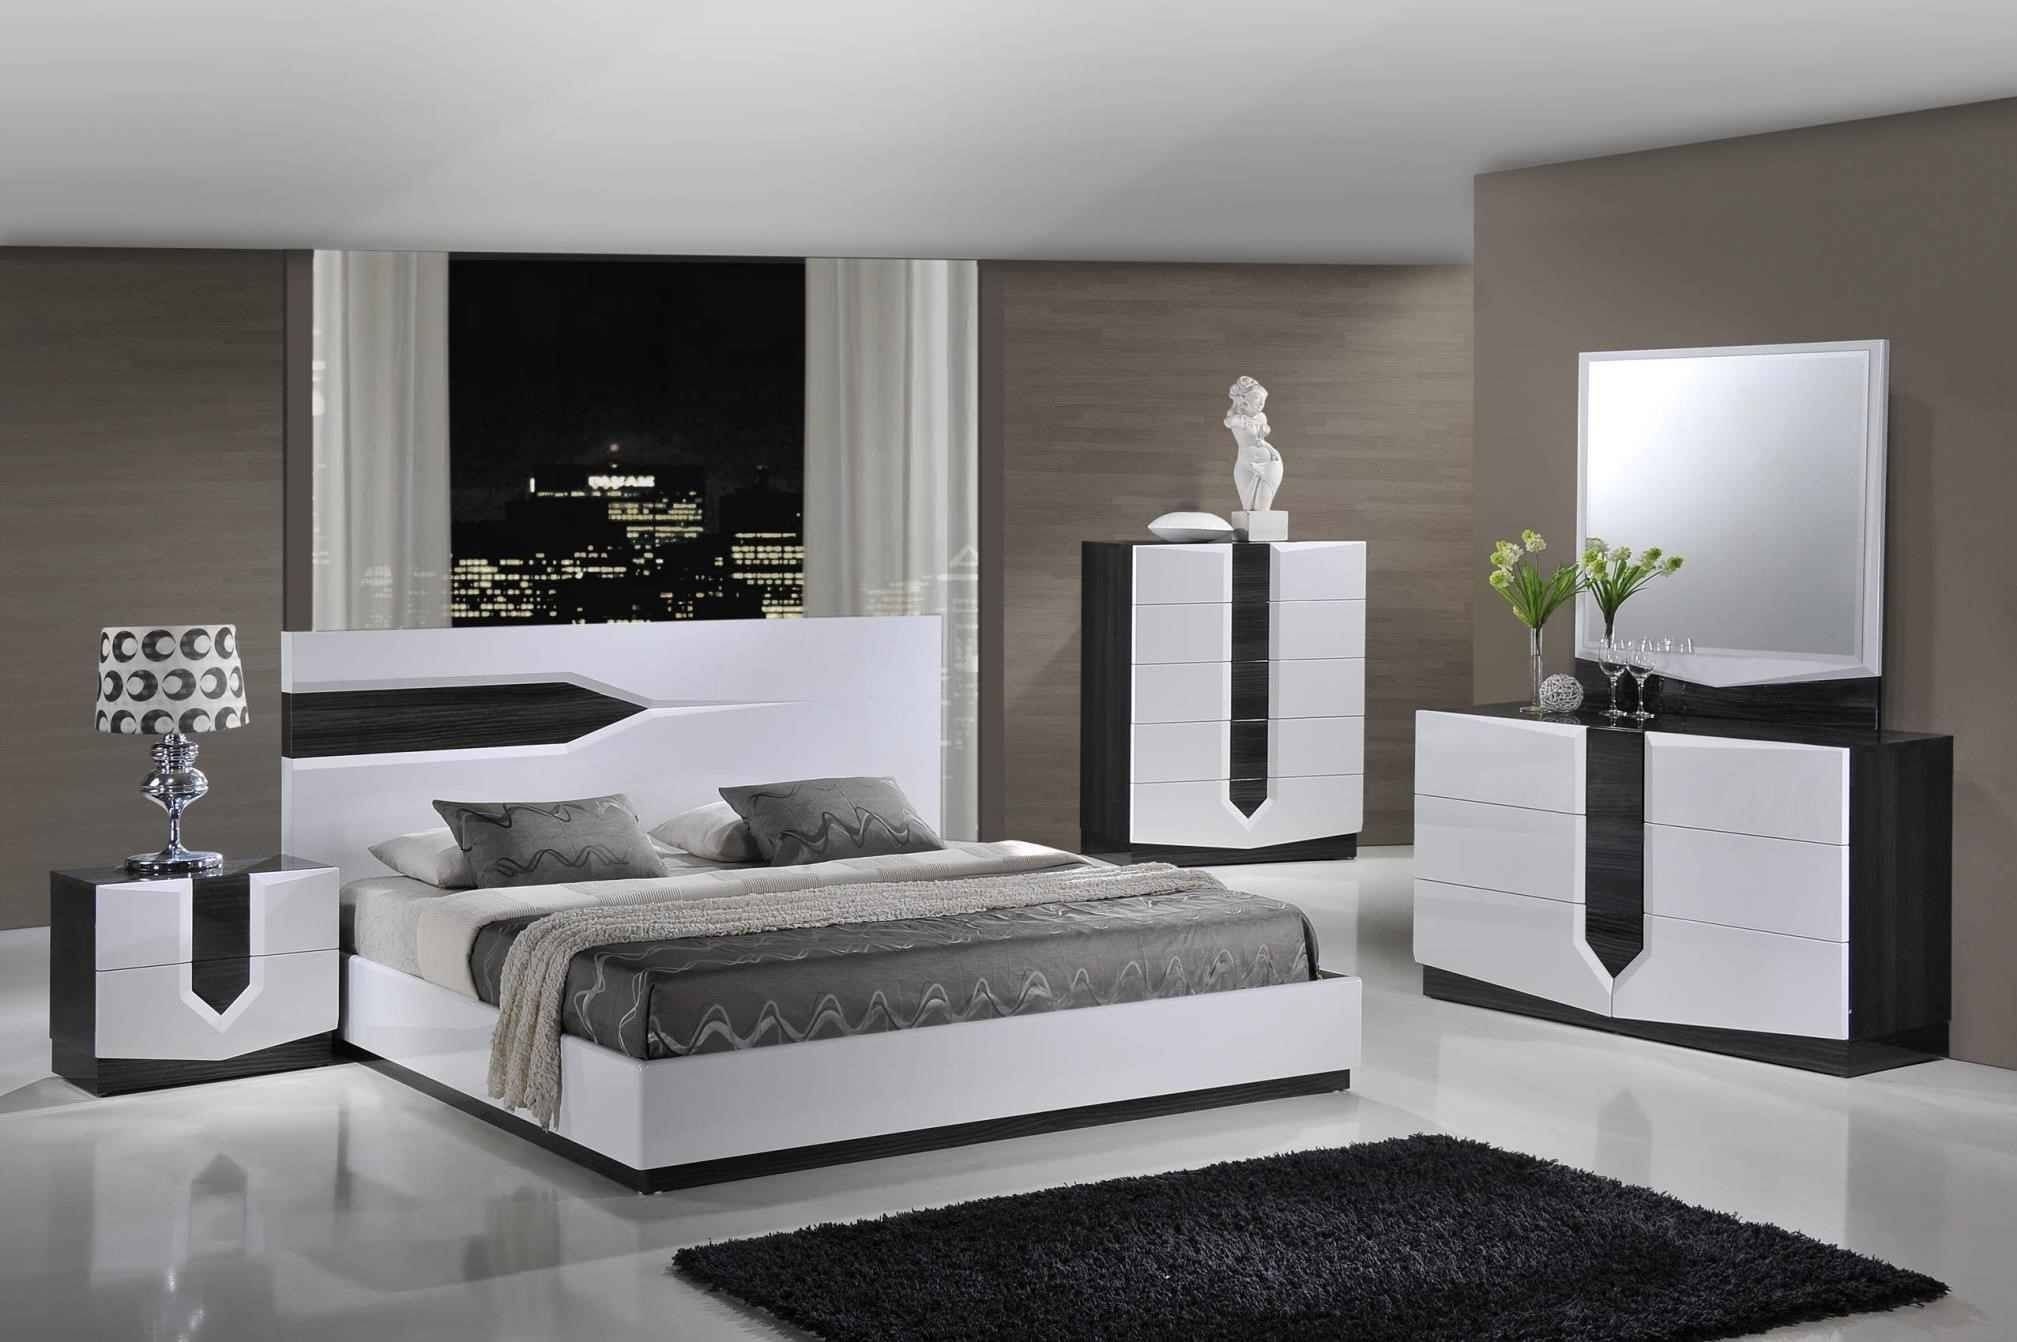 black shiny bedroom furniture